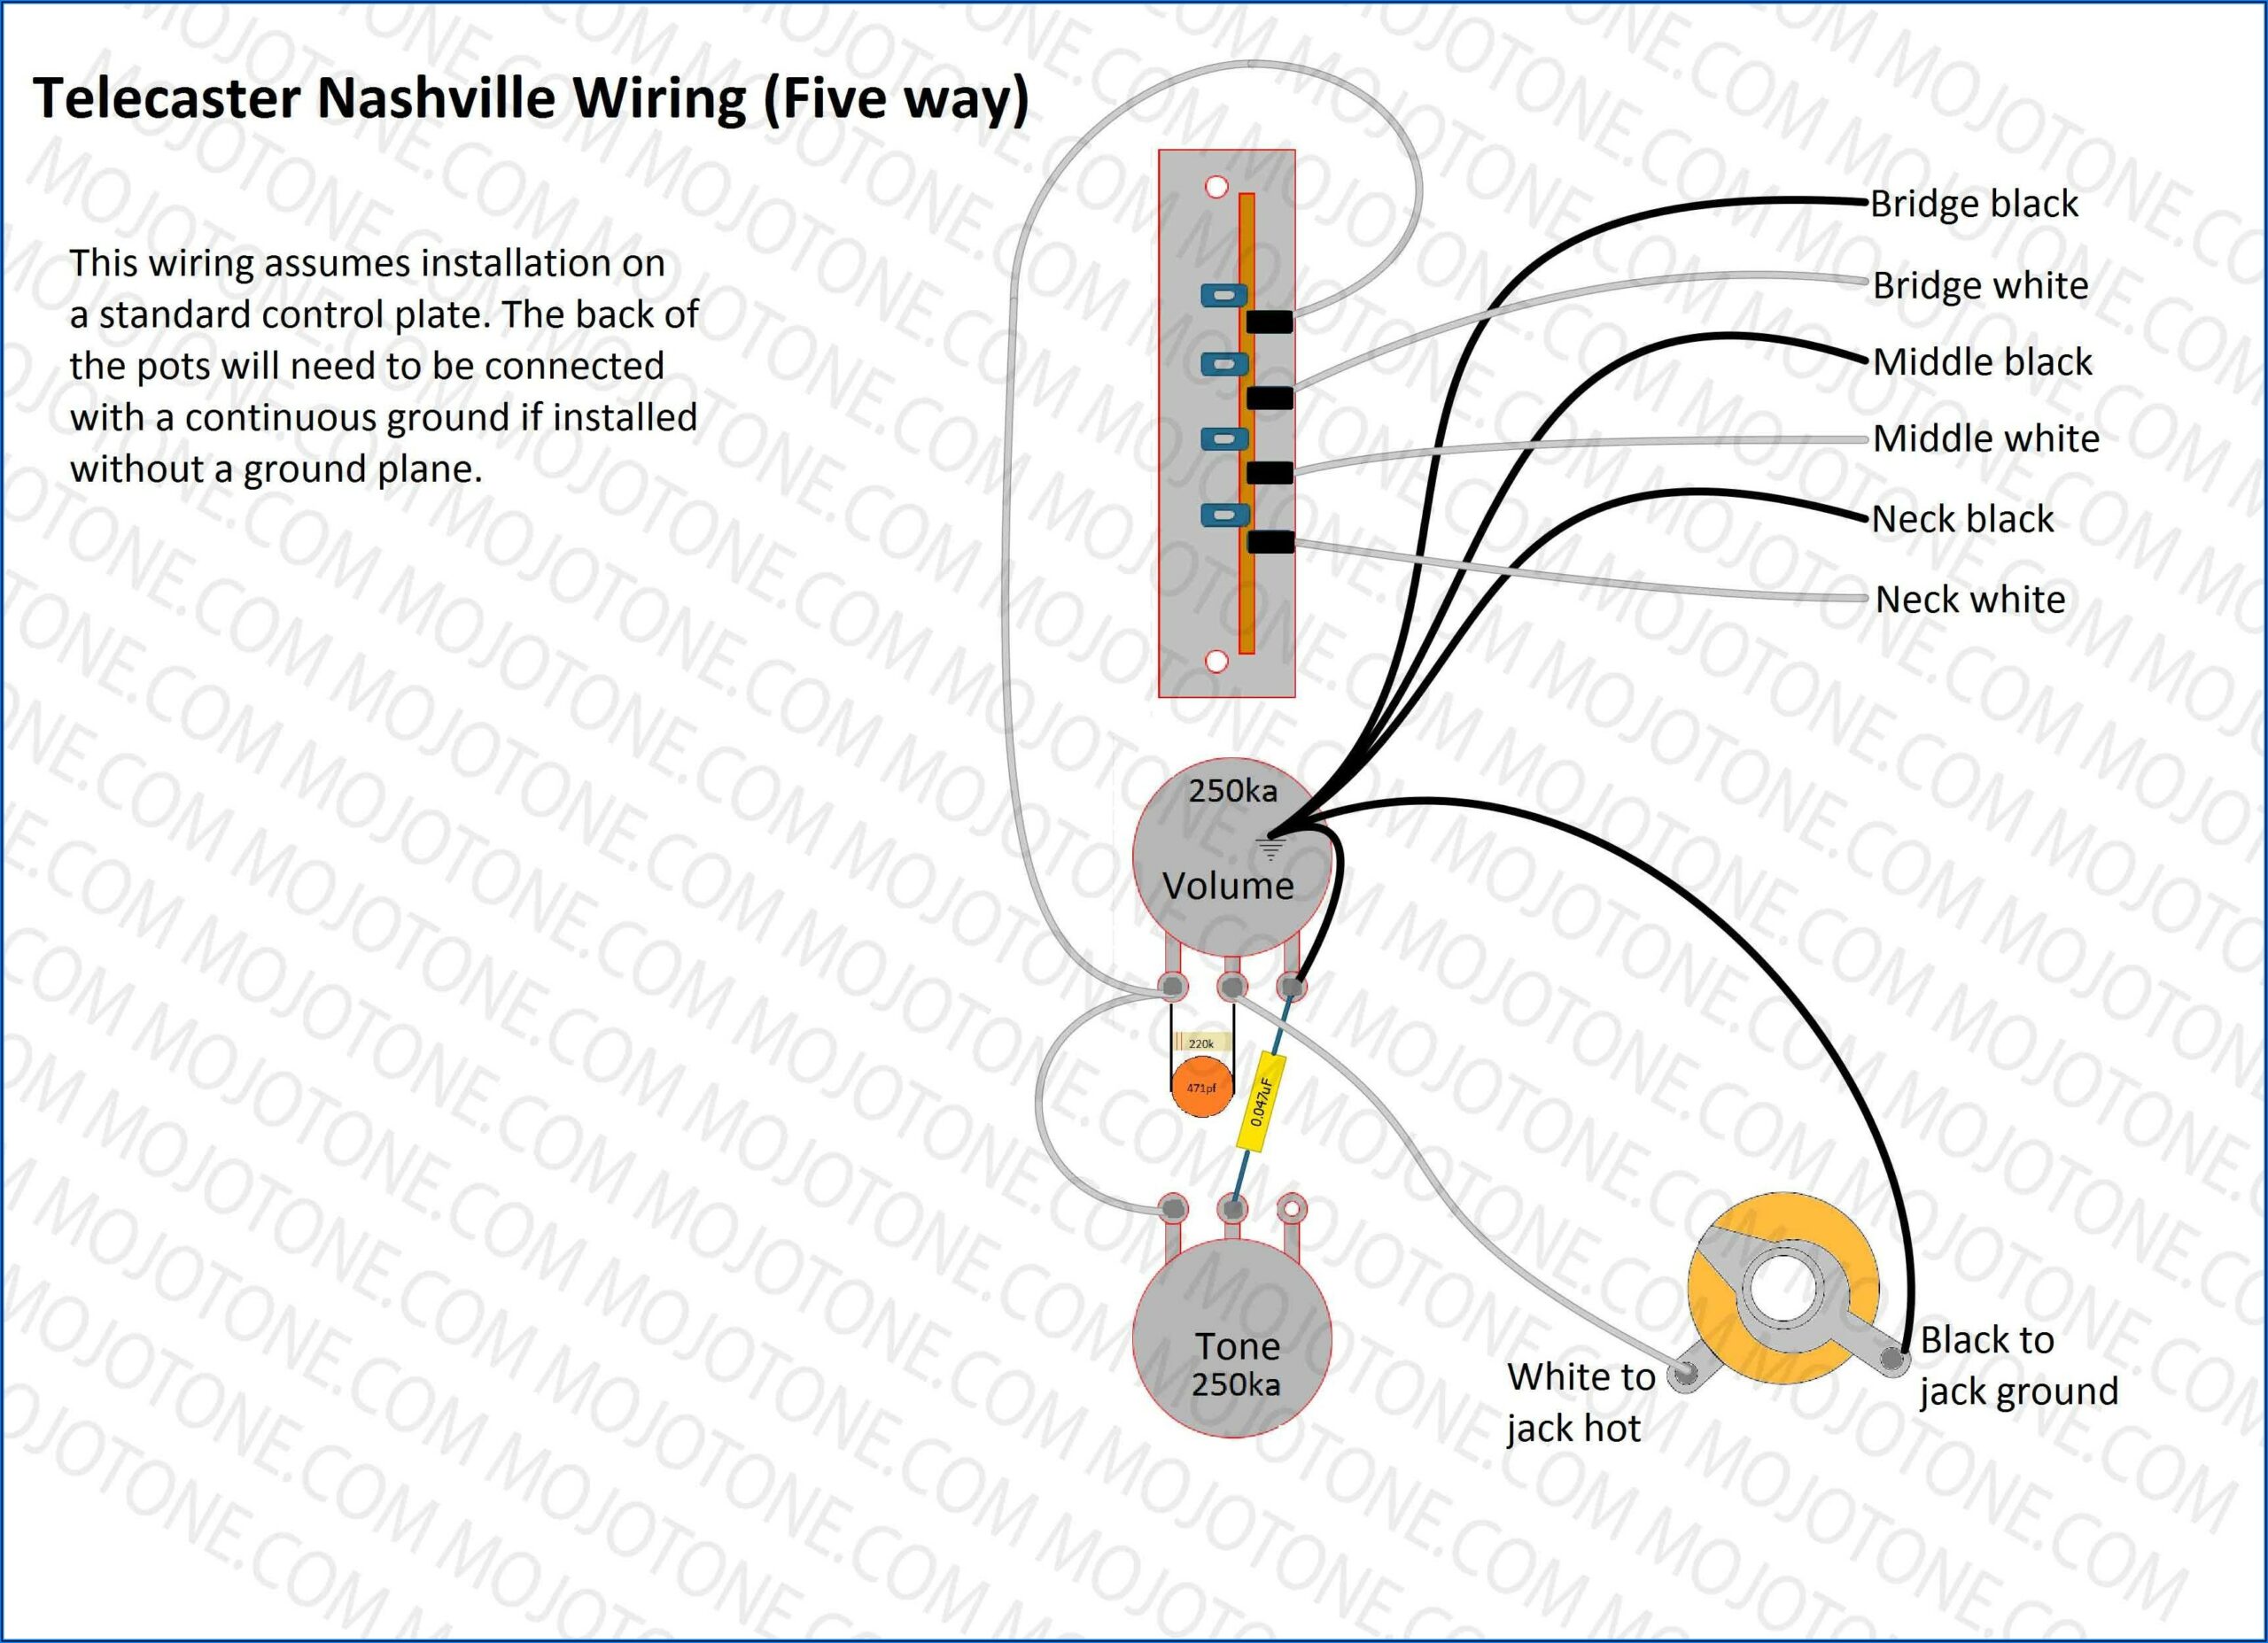 Nashville Power Telecaster Wiring Diagram